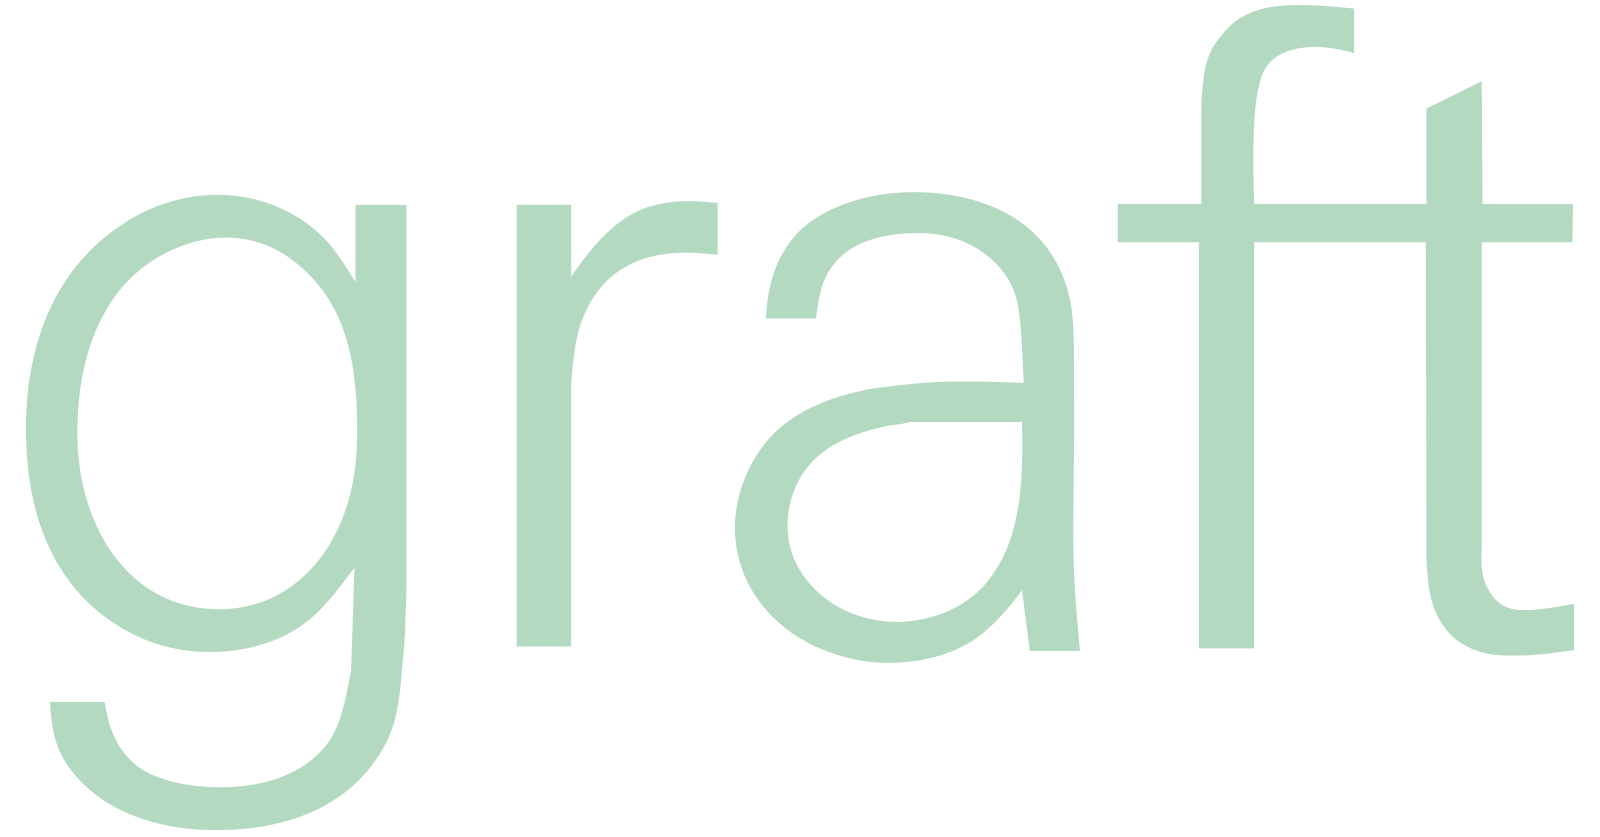 Graft Inc.